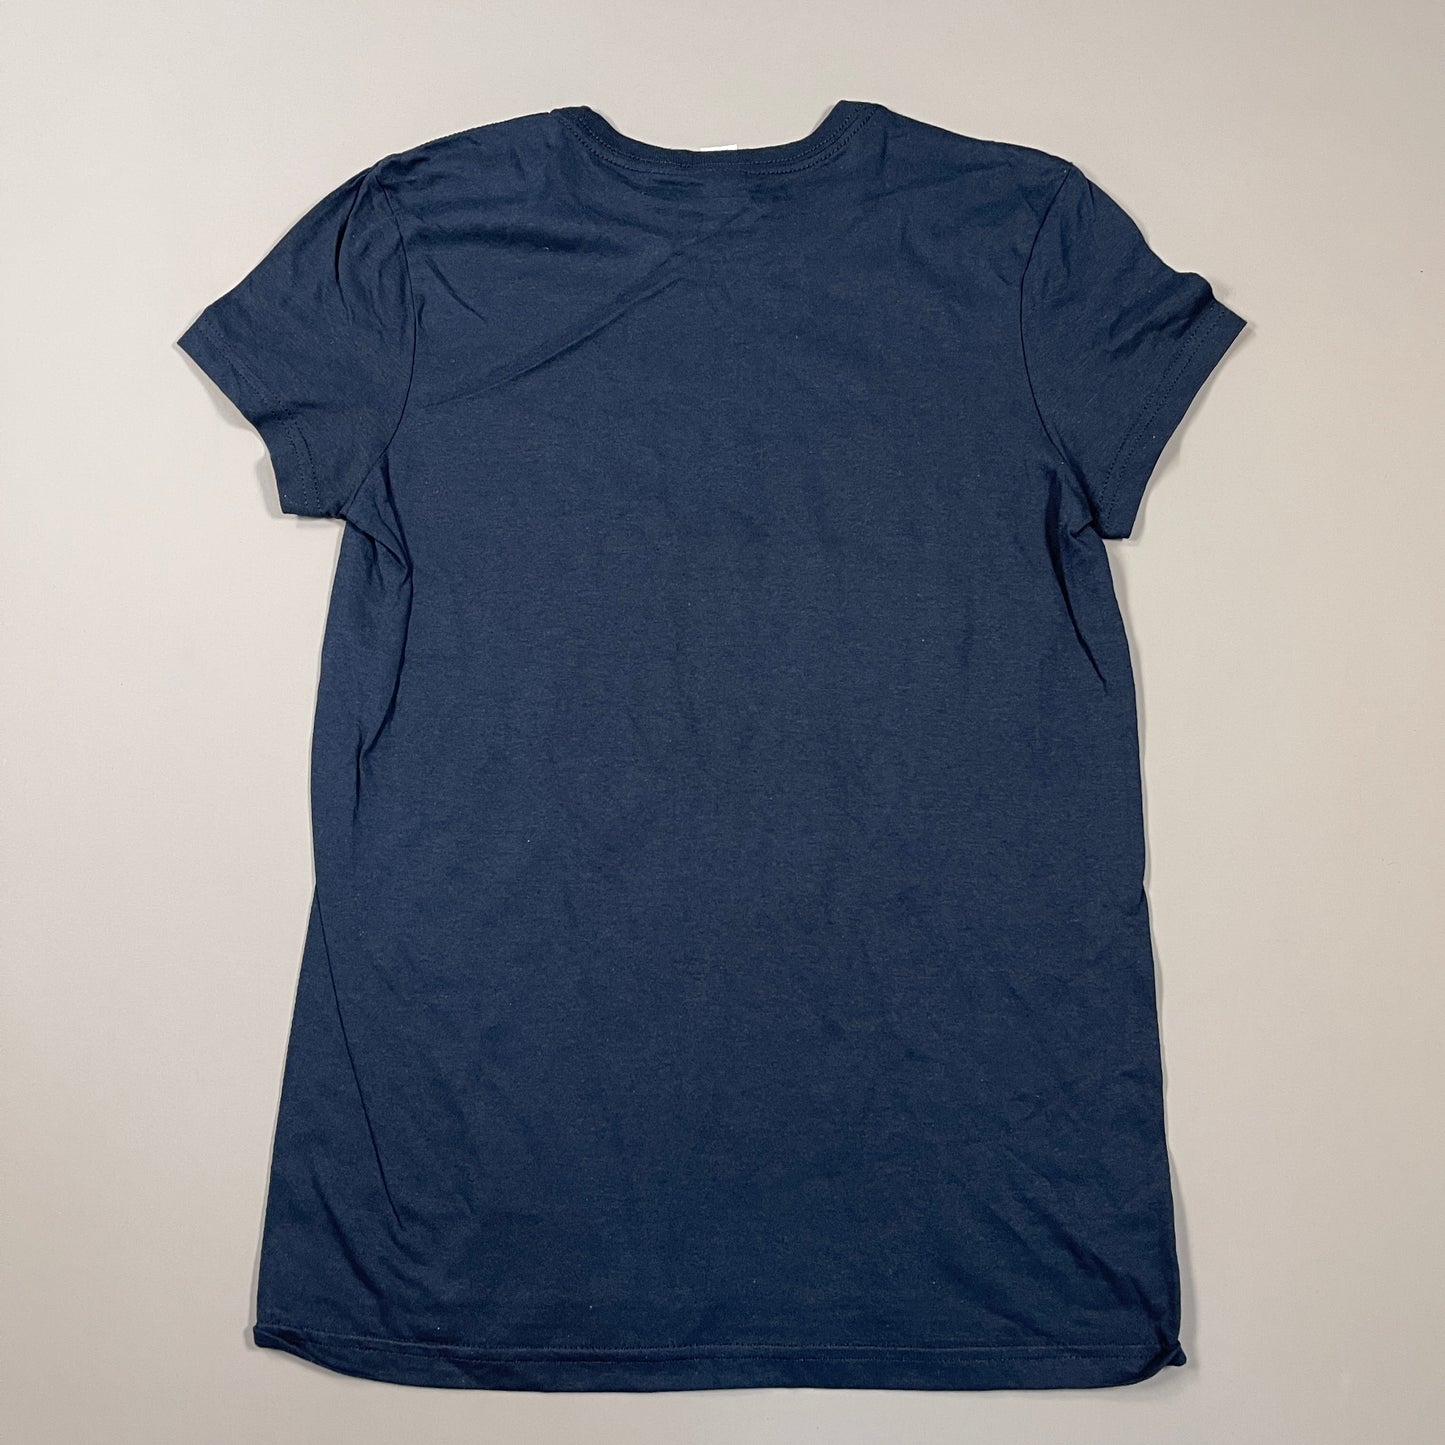 SKILLET Band Tee Shirt T-Shirt Youth Sz M Blue/Orange (New)